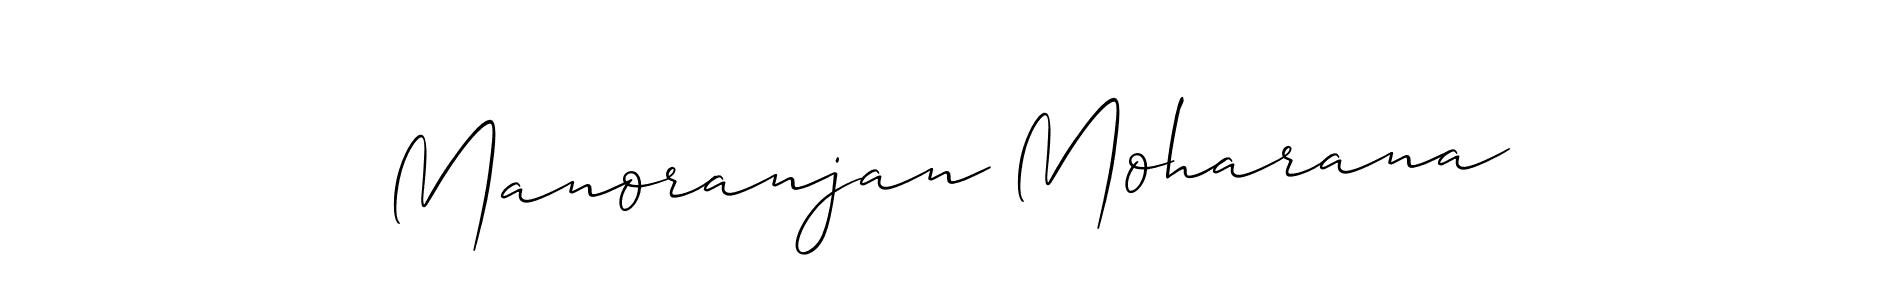 95+ Manoranjan Moharana Name Signature Style Ideas | Special eSign